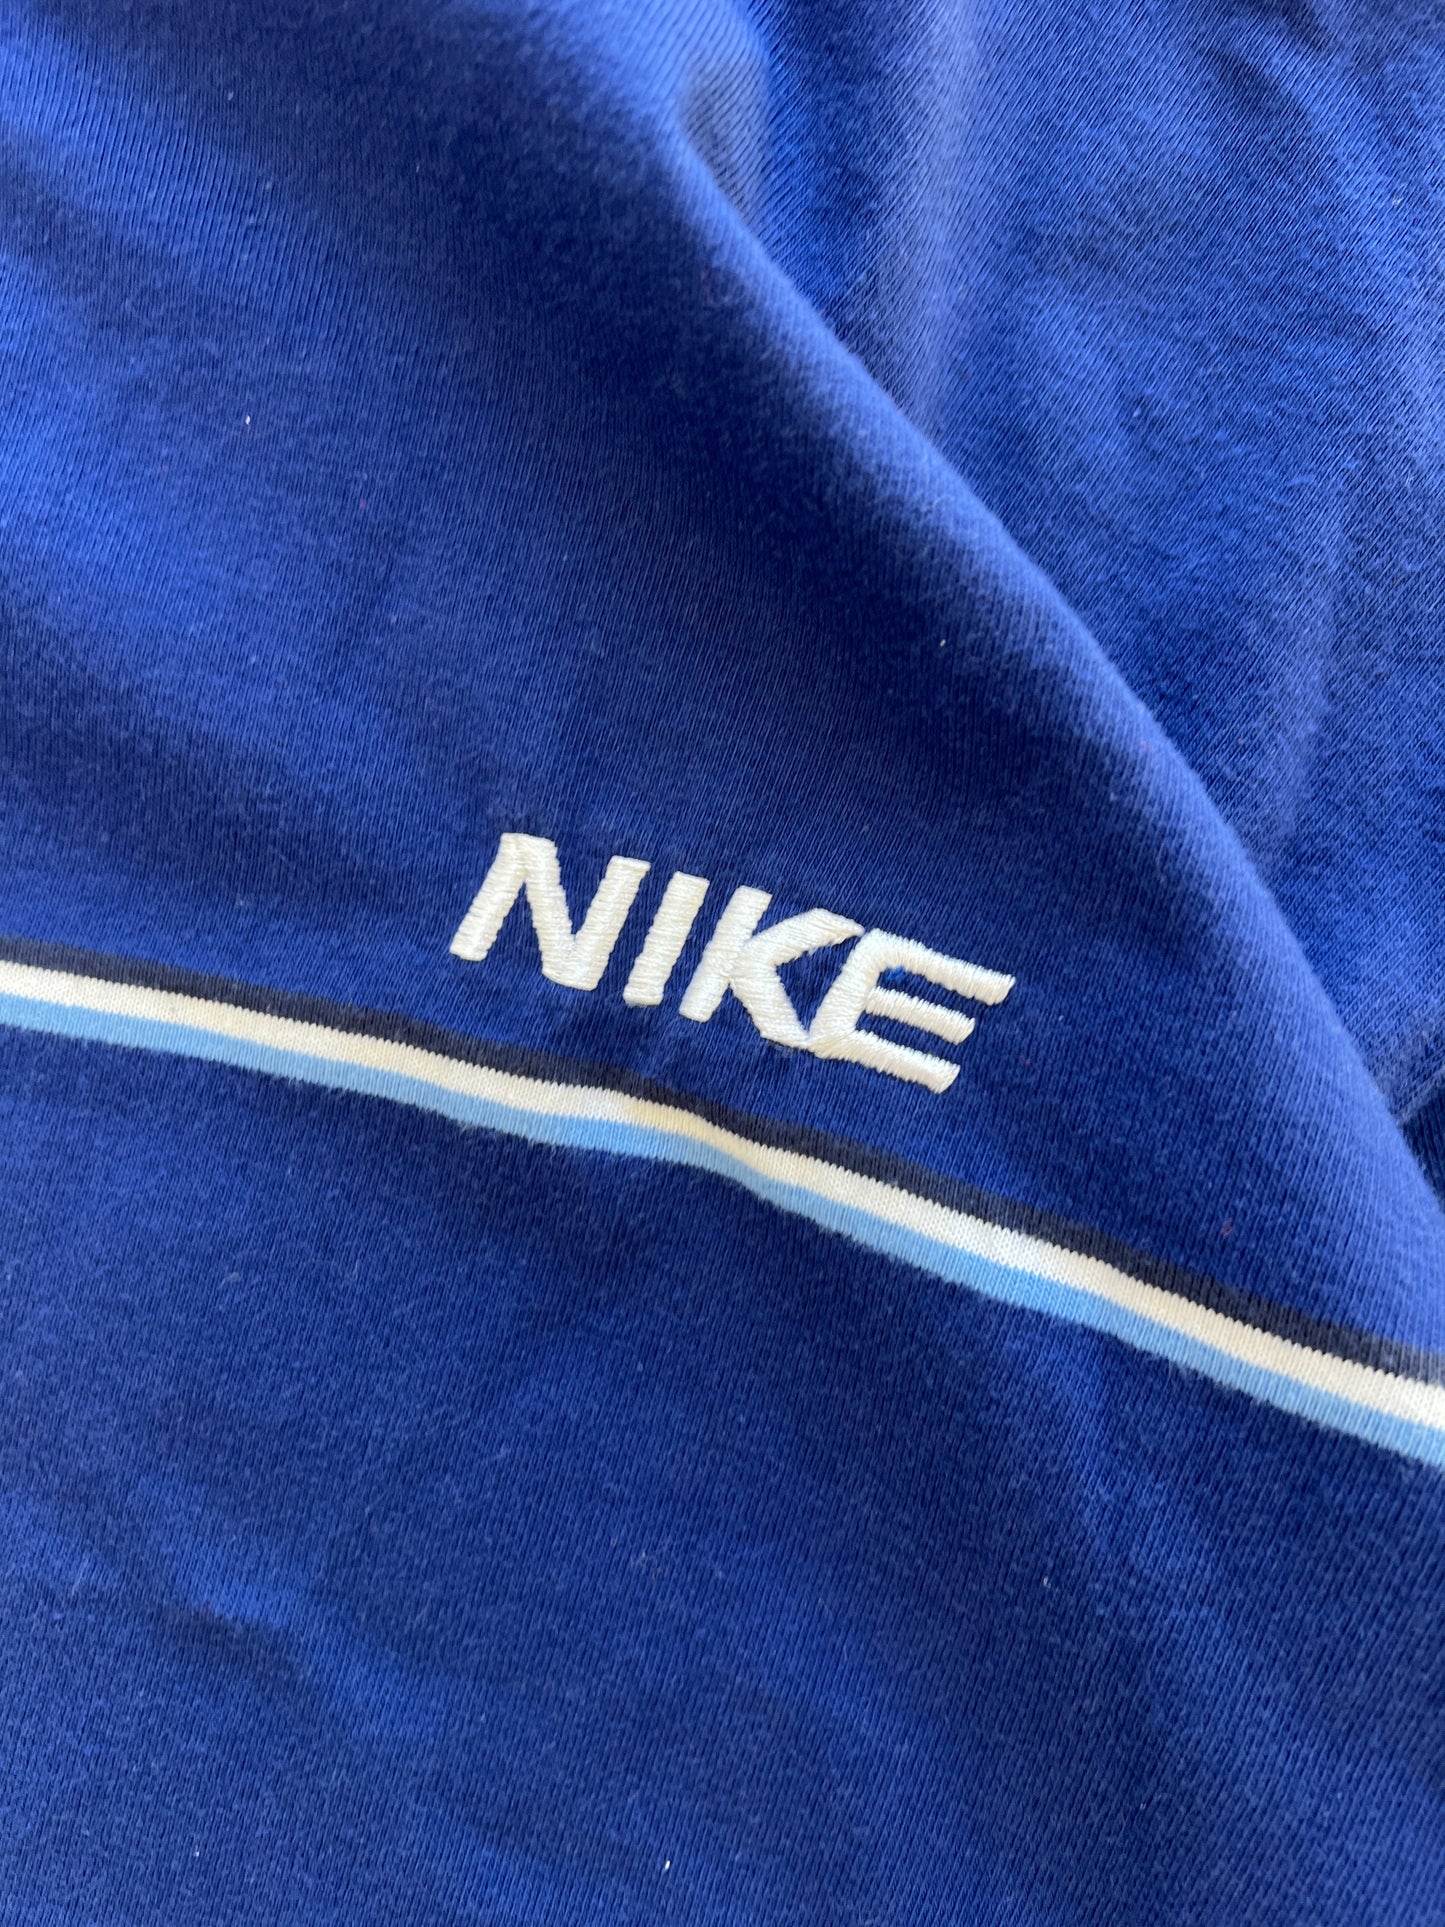 Vintage Stripped Nike Long Sleeve - XL